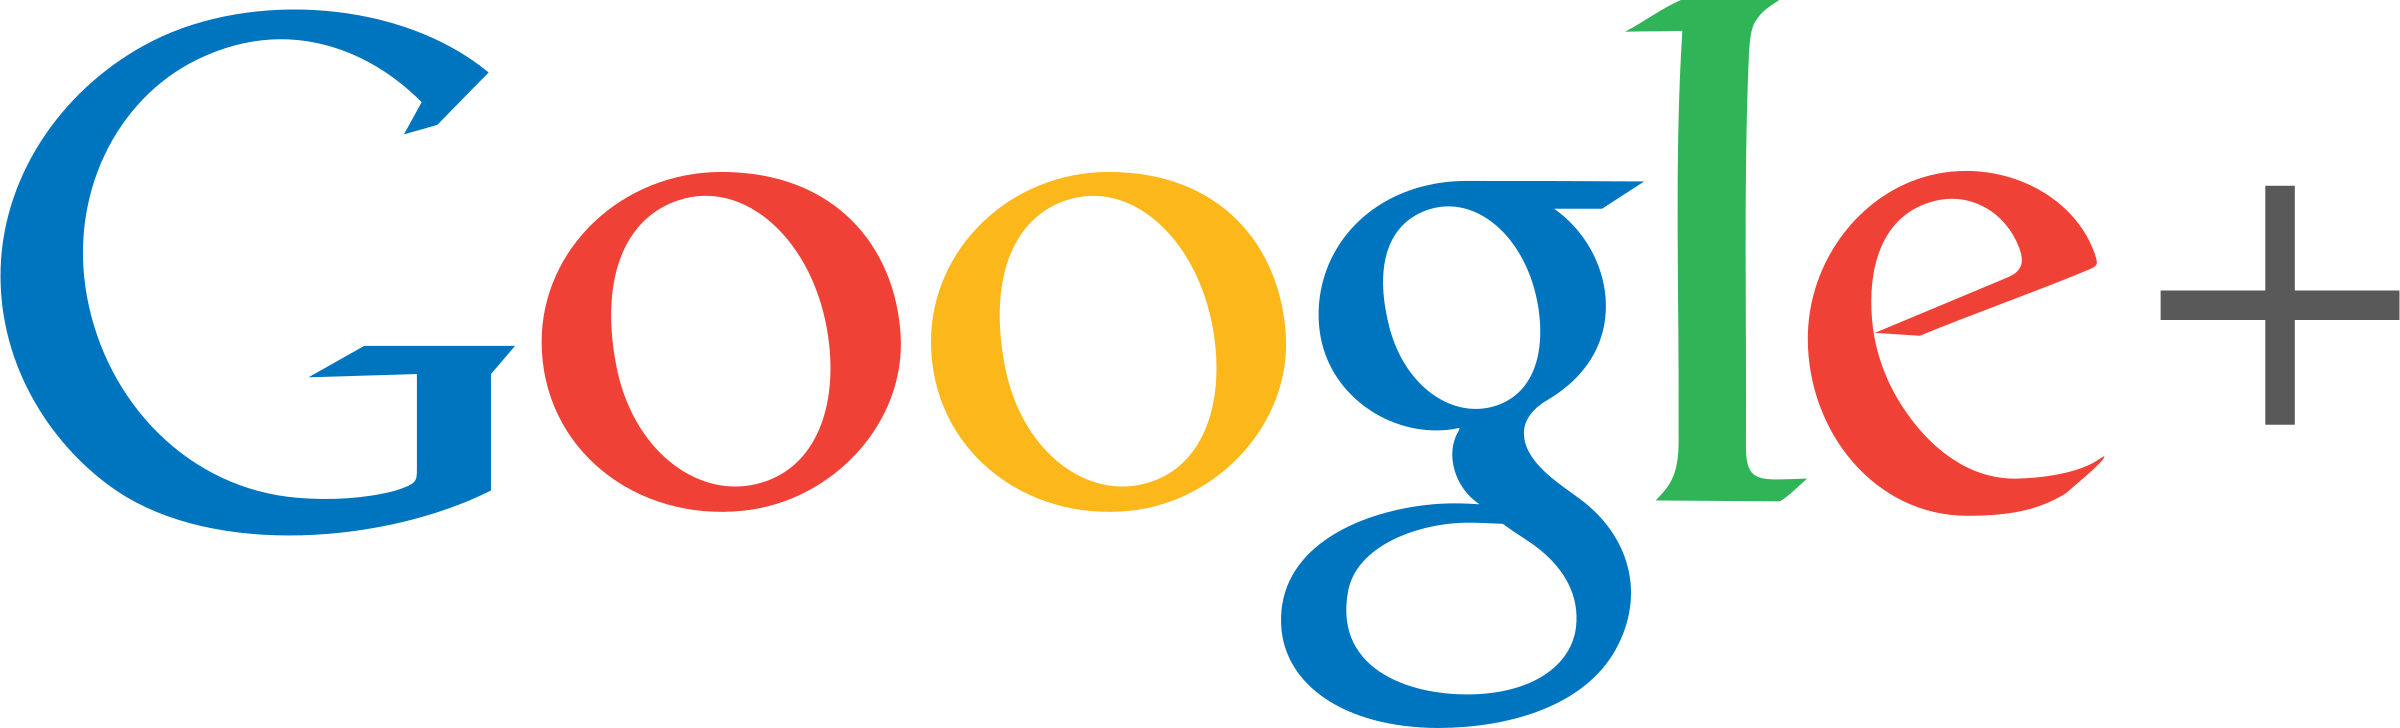 Goggle Plus Logo - Google Plus Logo PNG Transparent & SVG Vector